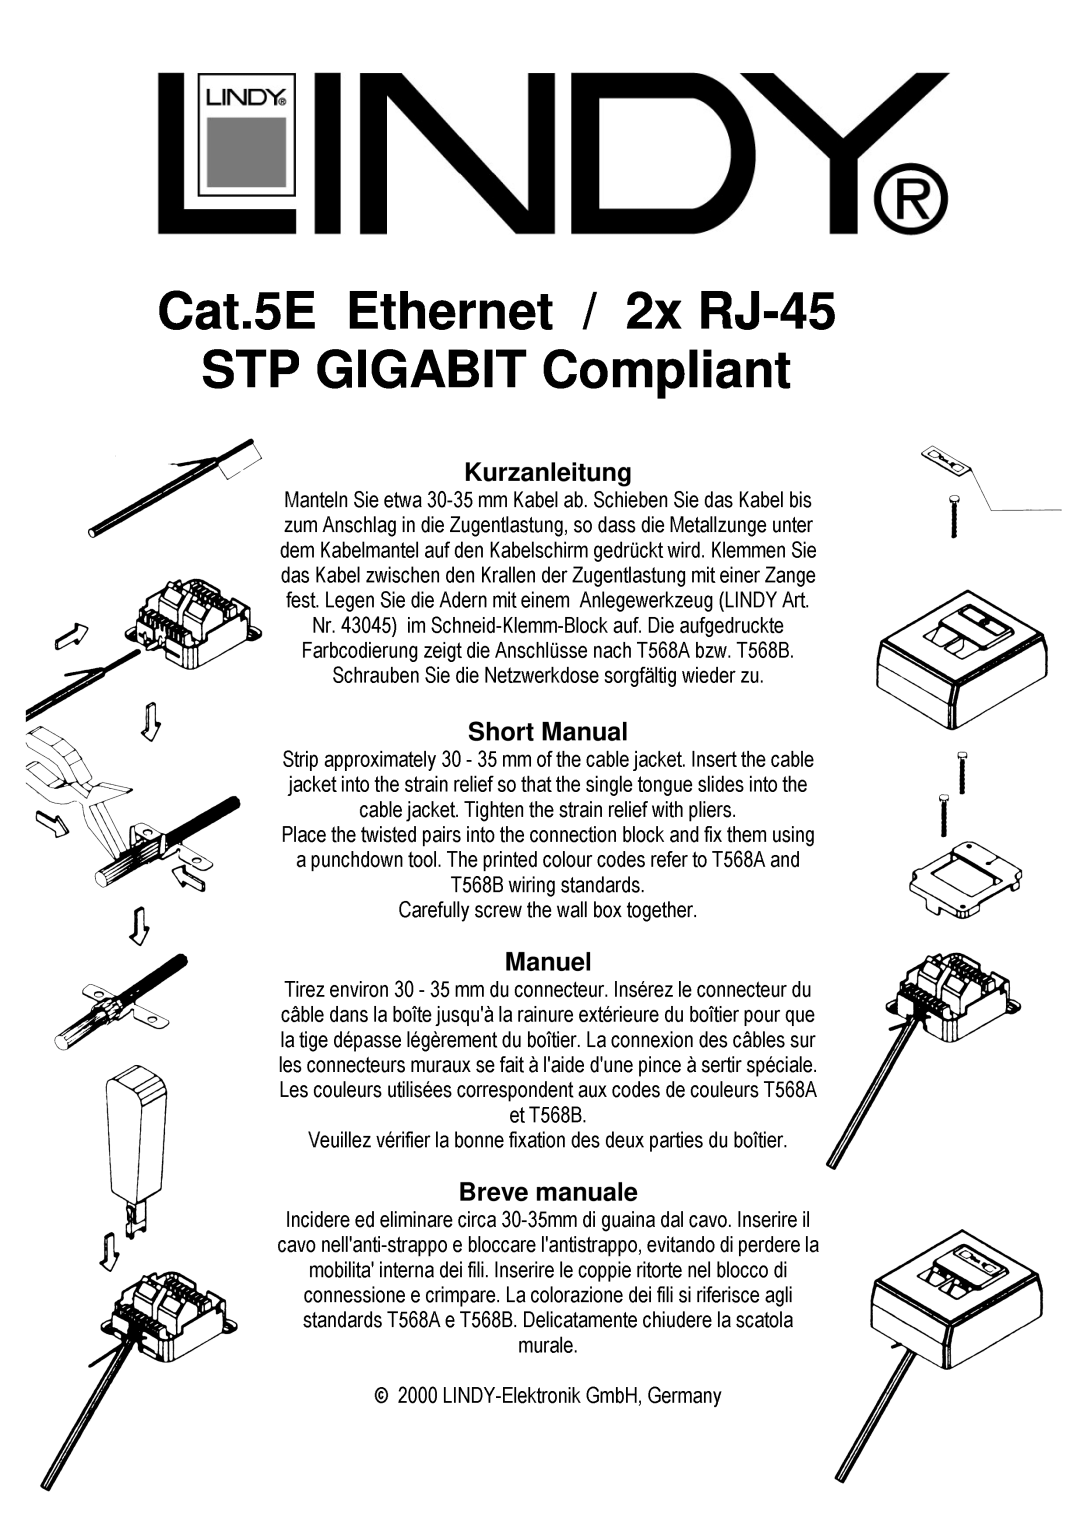 Lindy 2X RJ-45 manual Cat.5E Ethernet / 2x RJ-45 STP GIGABIT Compliant, Kurzanleitung Short Manual Manuel Breve manuale 